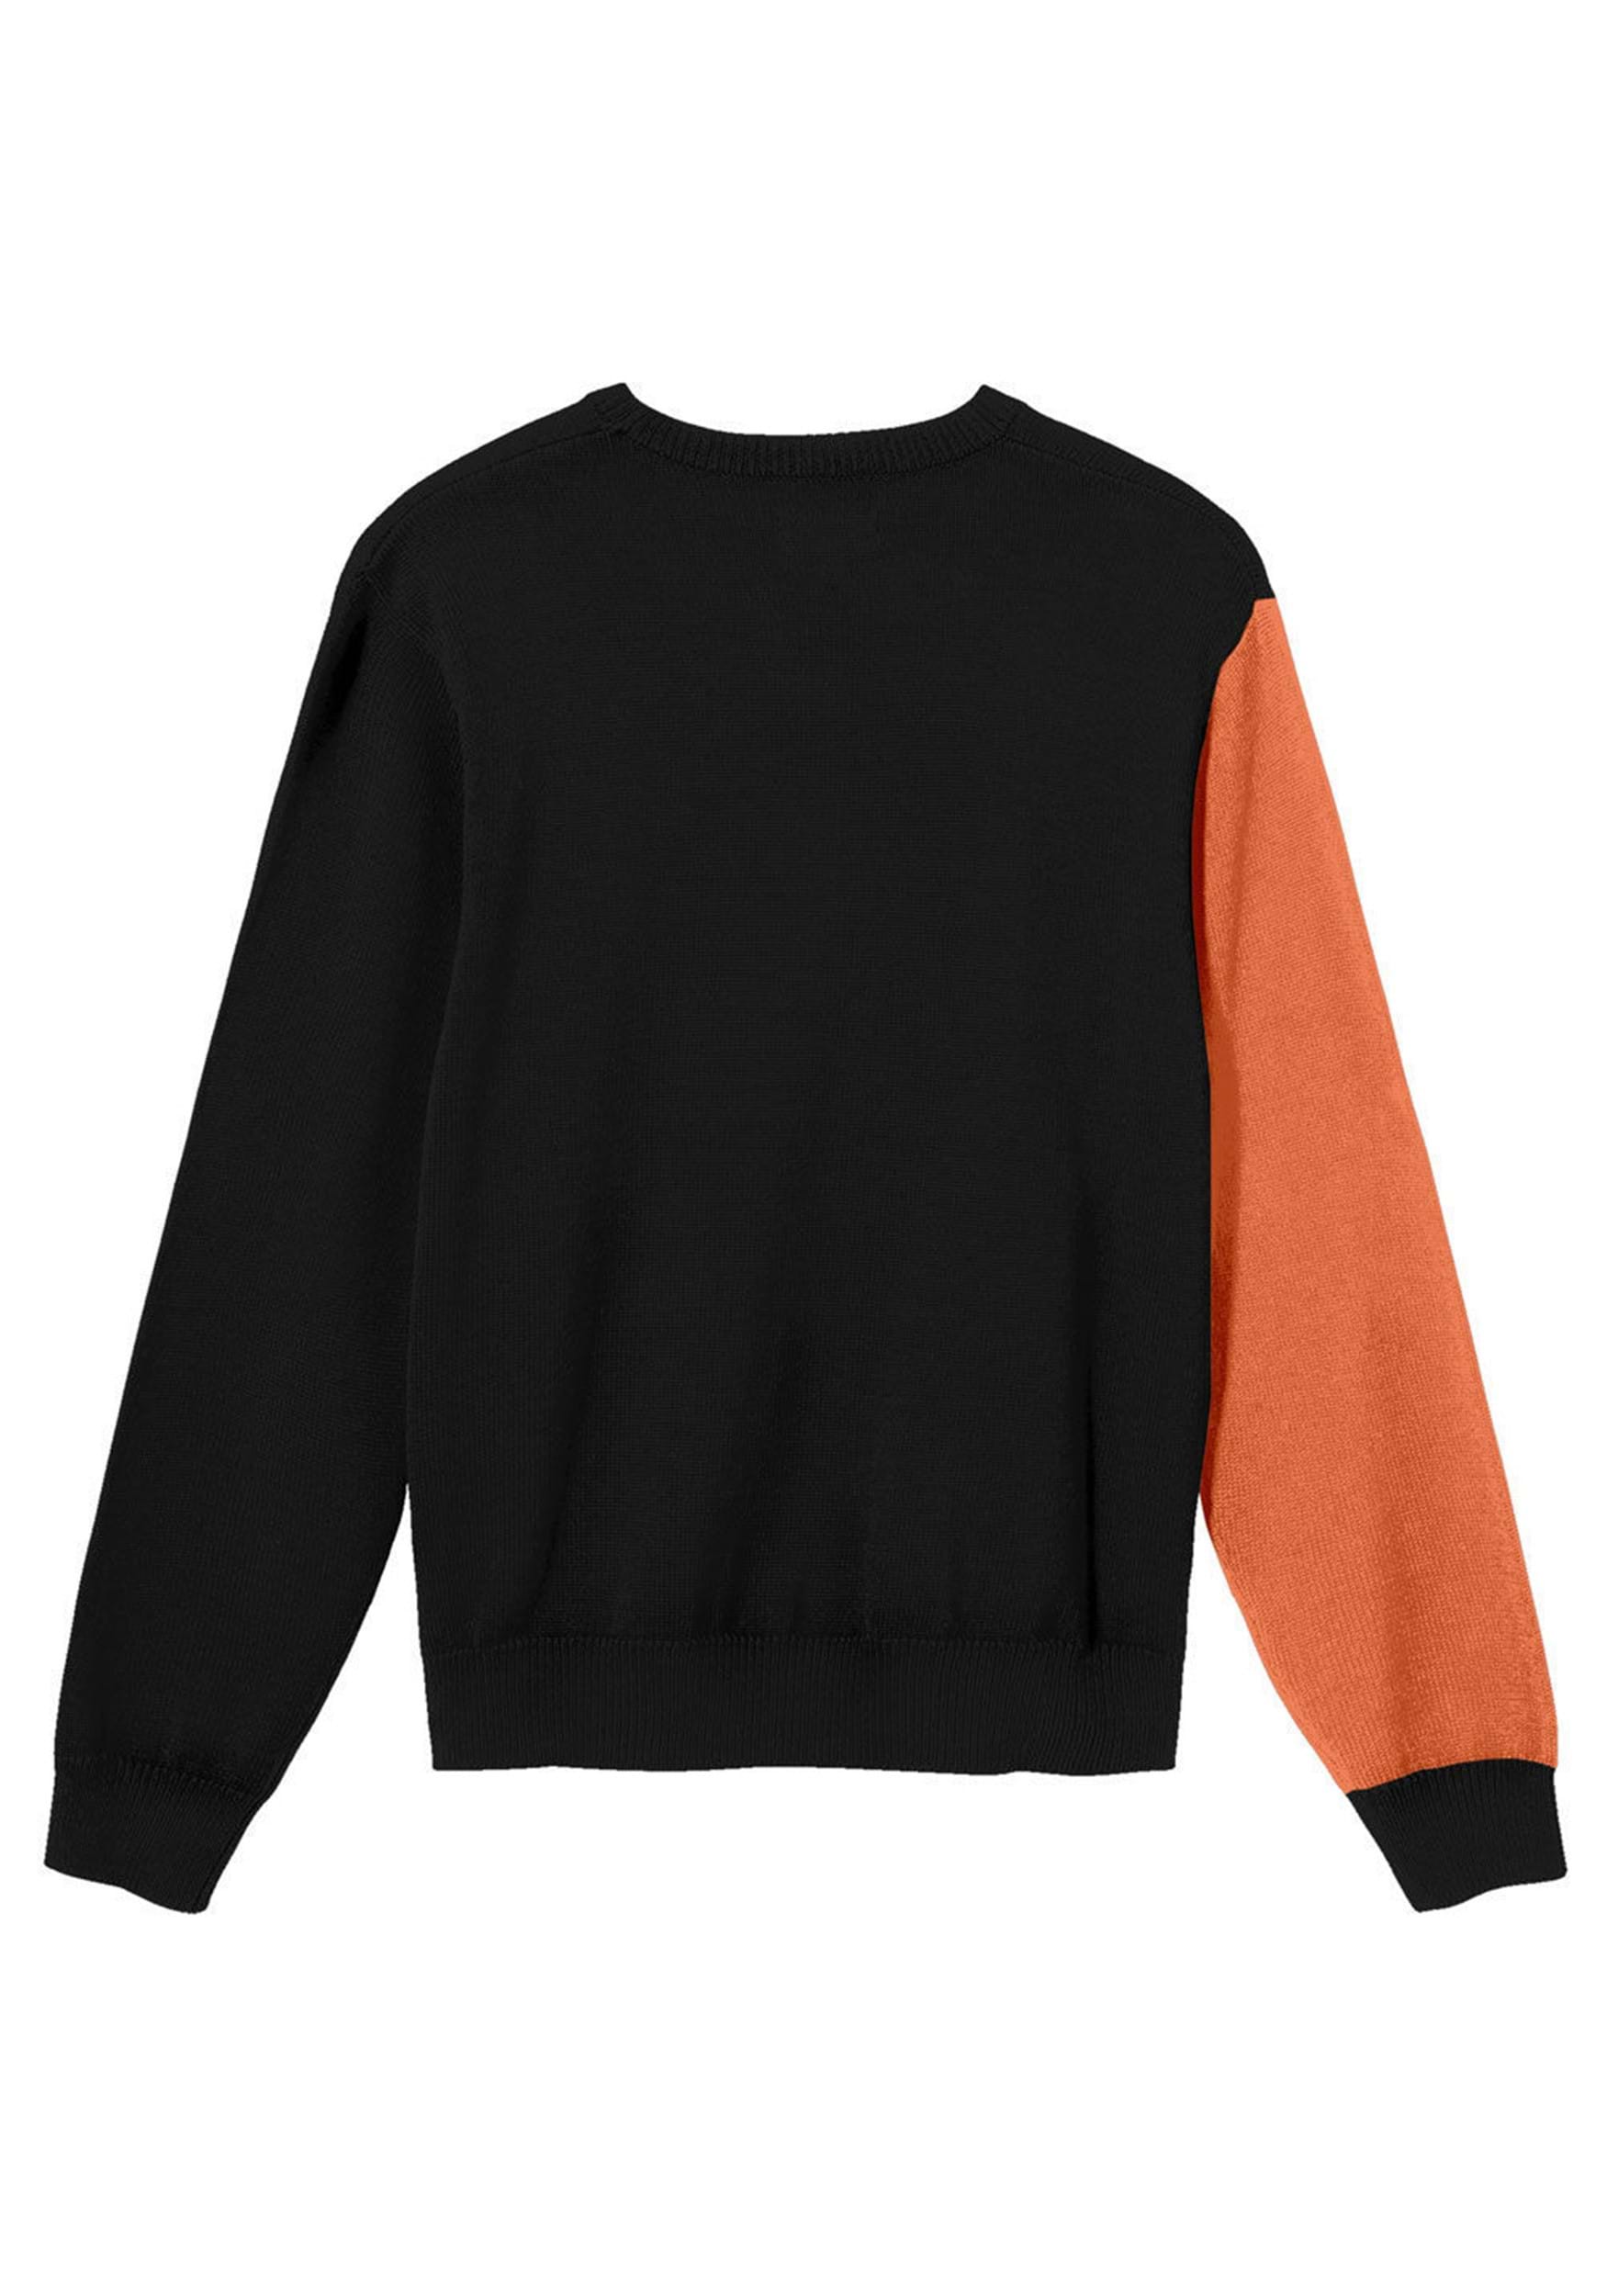 Adult Naruto Uzumaki Jacquard Knit Pre-Pack Sweater